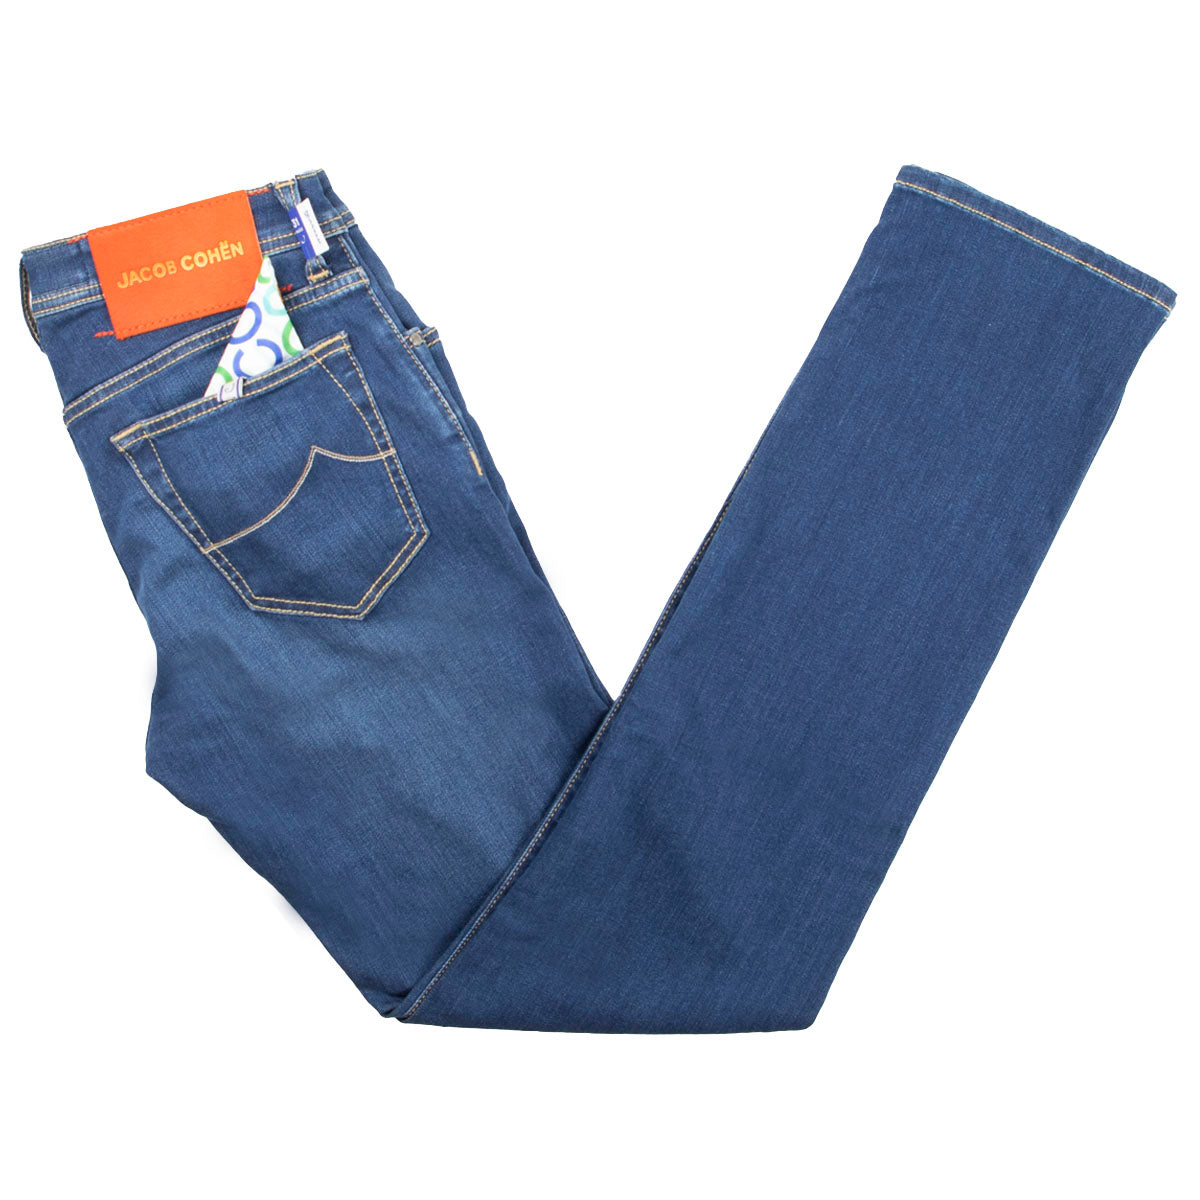 Clean Denim ‘Bard’ Stretch Slim Fit Jeans  Jacob Cohën   